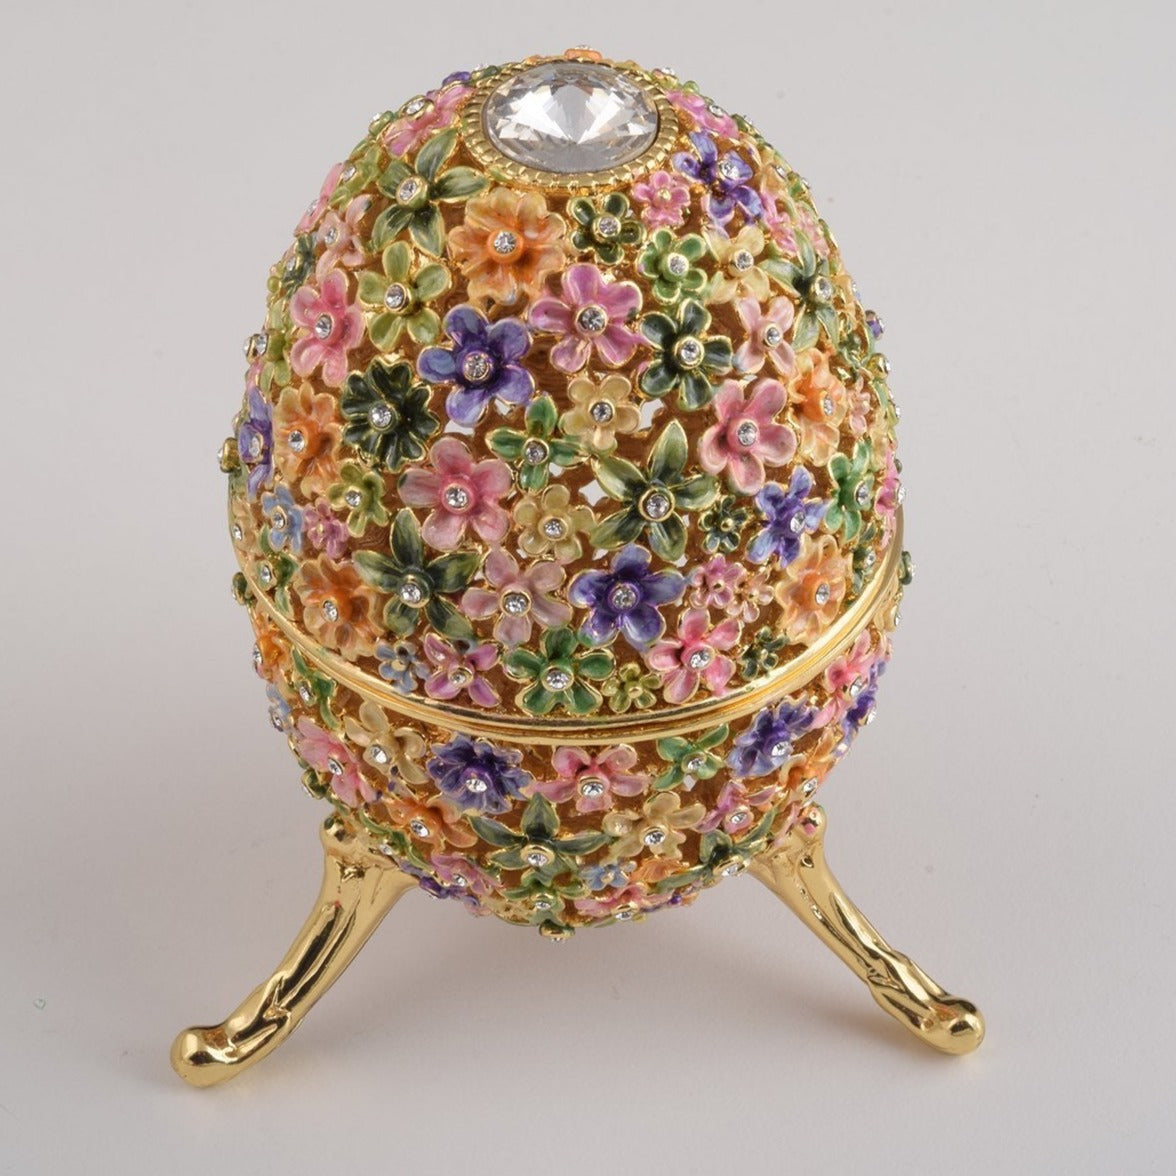 Keren Kopal Gold with Colorful Flowers Easter Egg trinket box 119.00